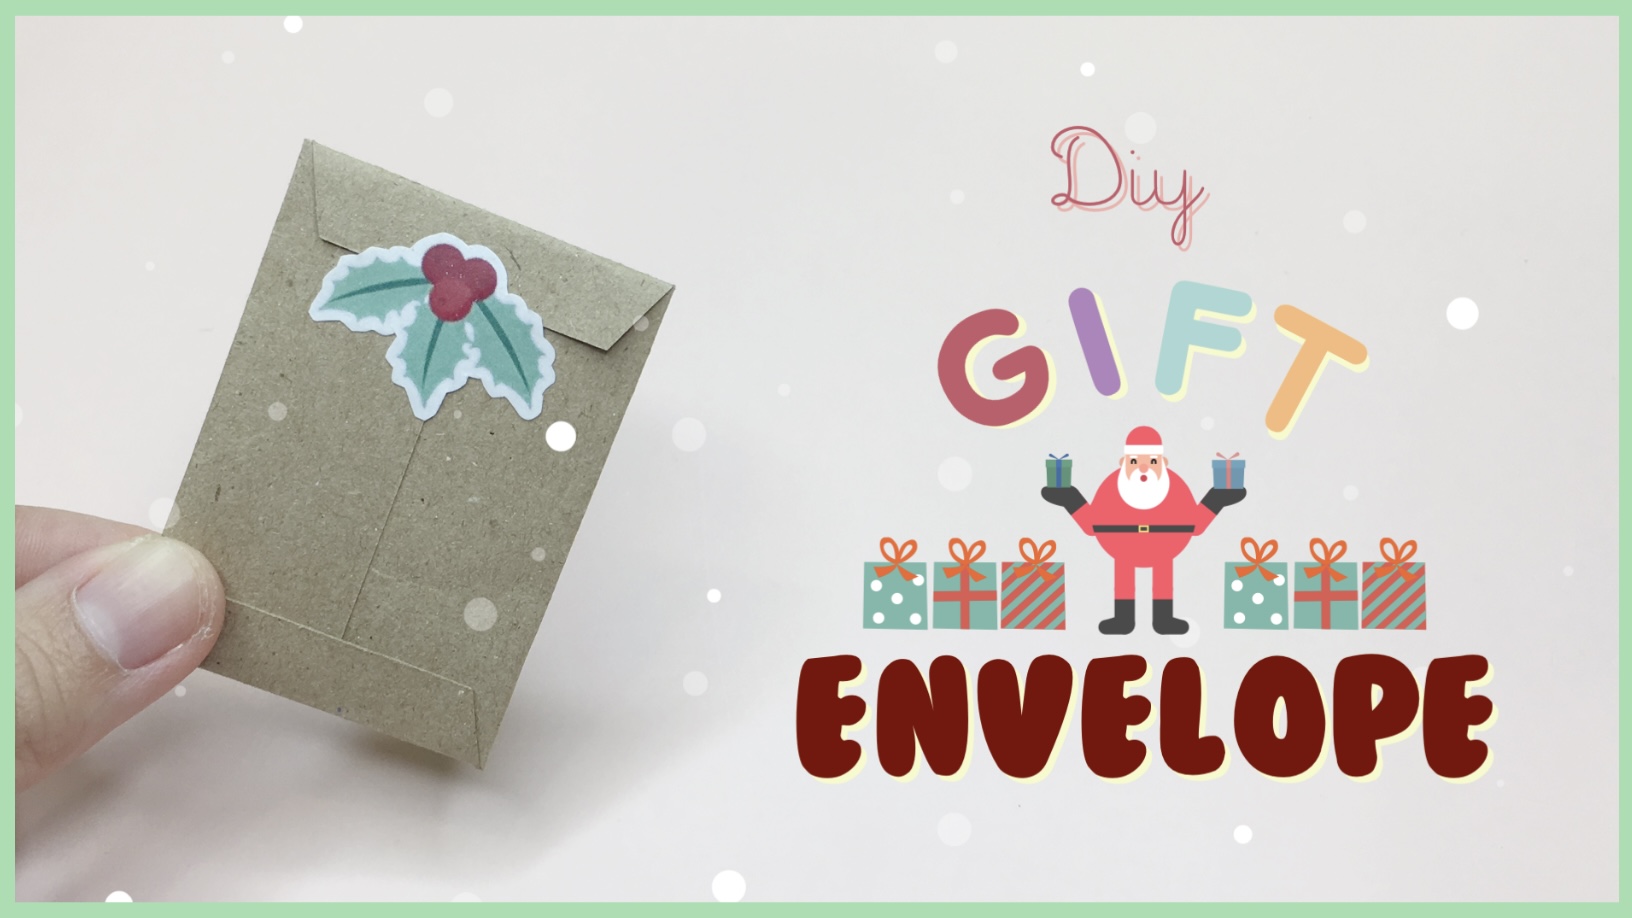 Diy Gift Envelope Or Small Business Packaging: วิธีห่อของขวัญ วิธีทำซอง ของขวัญง่ายๆ วันปีใหม่ - Pantip